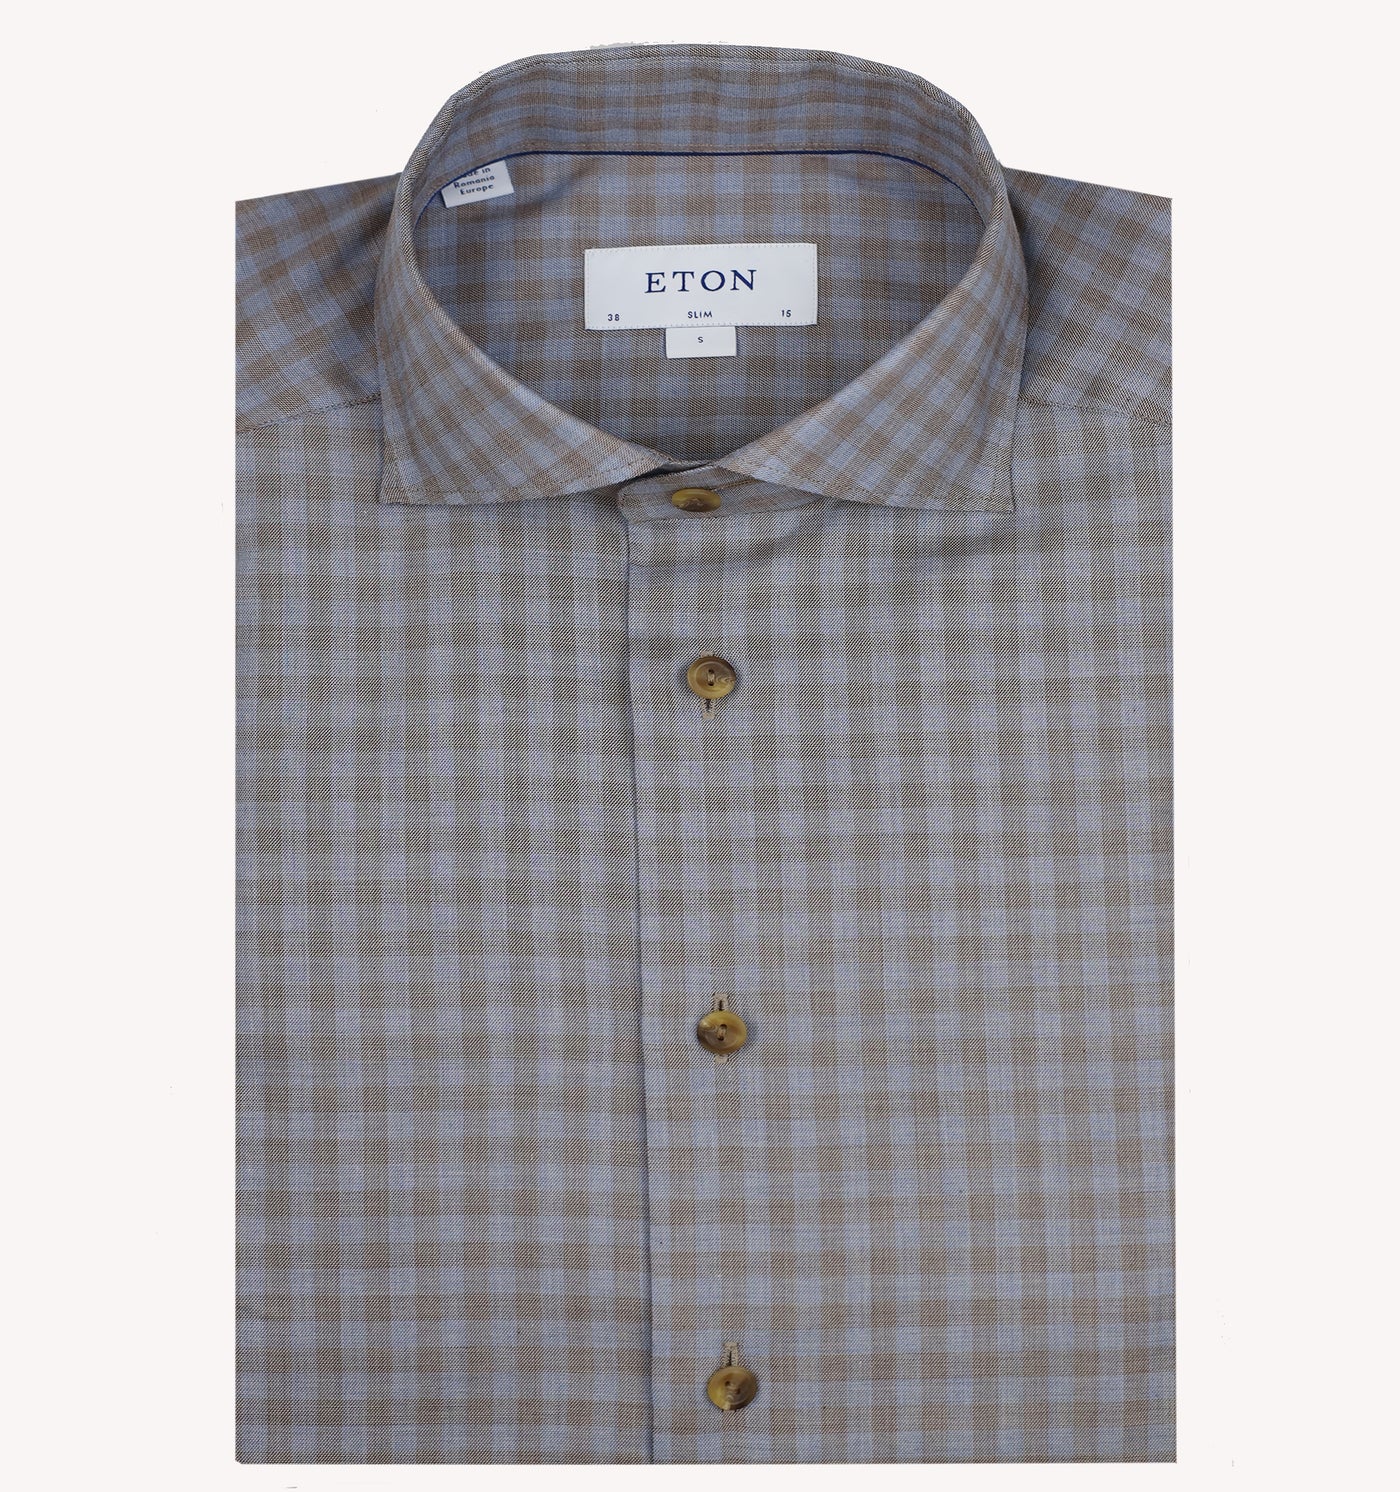 Eton Check Sport Shirt in Brown Slate